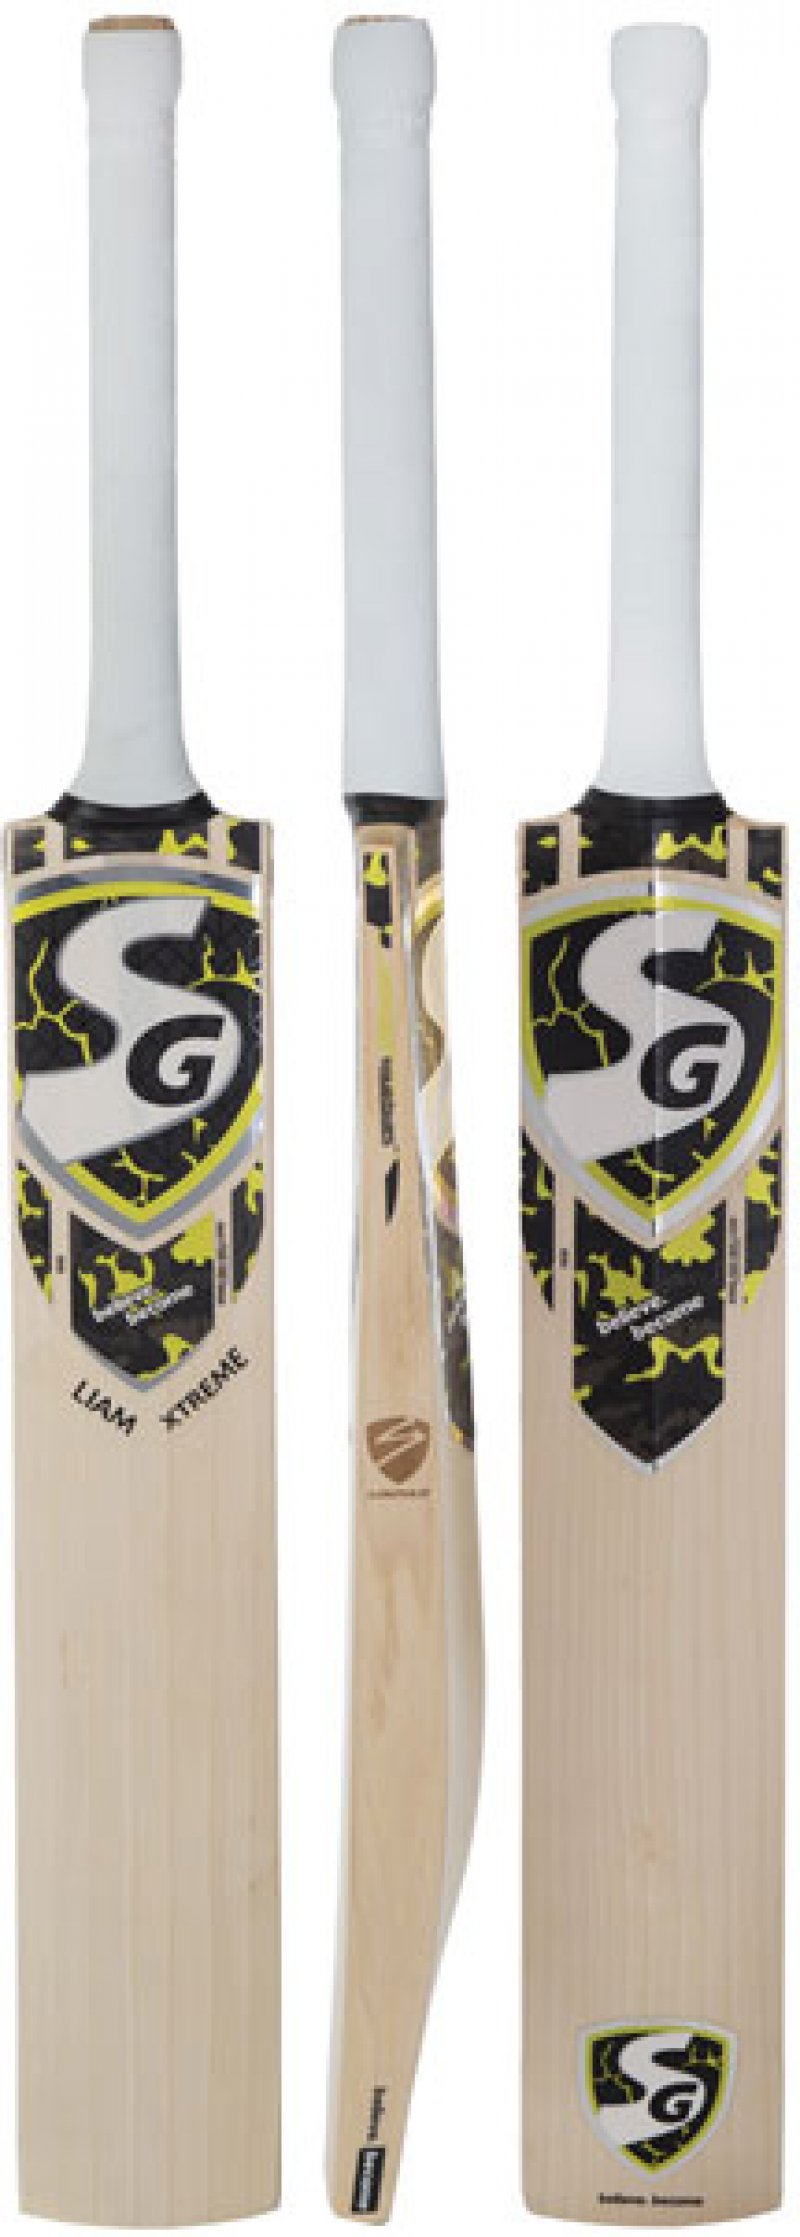 SG Liam Xtreme Cricket Bat